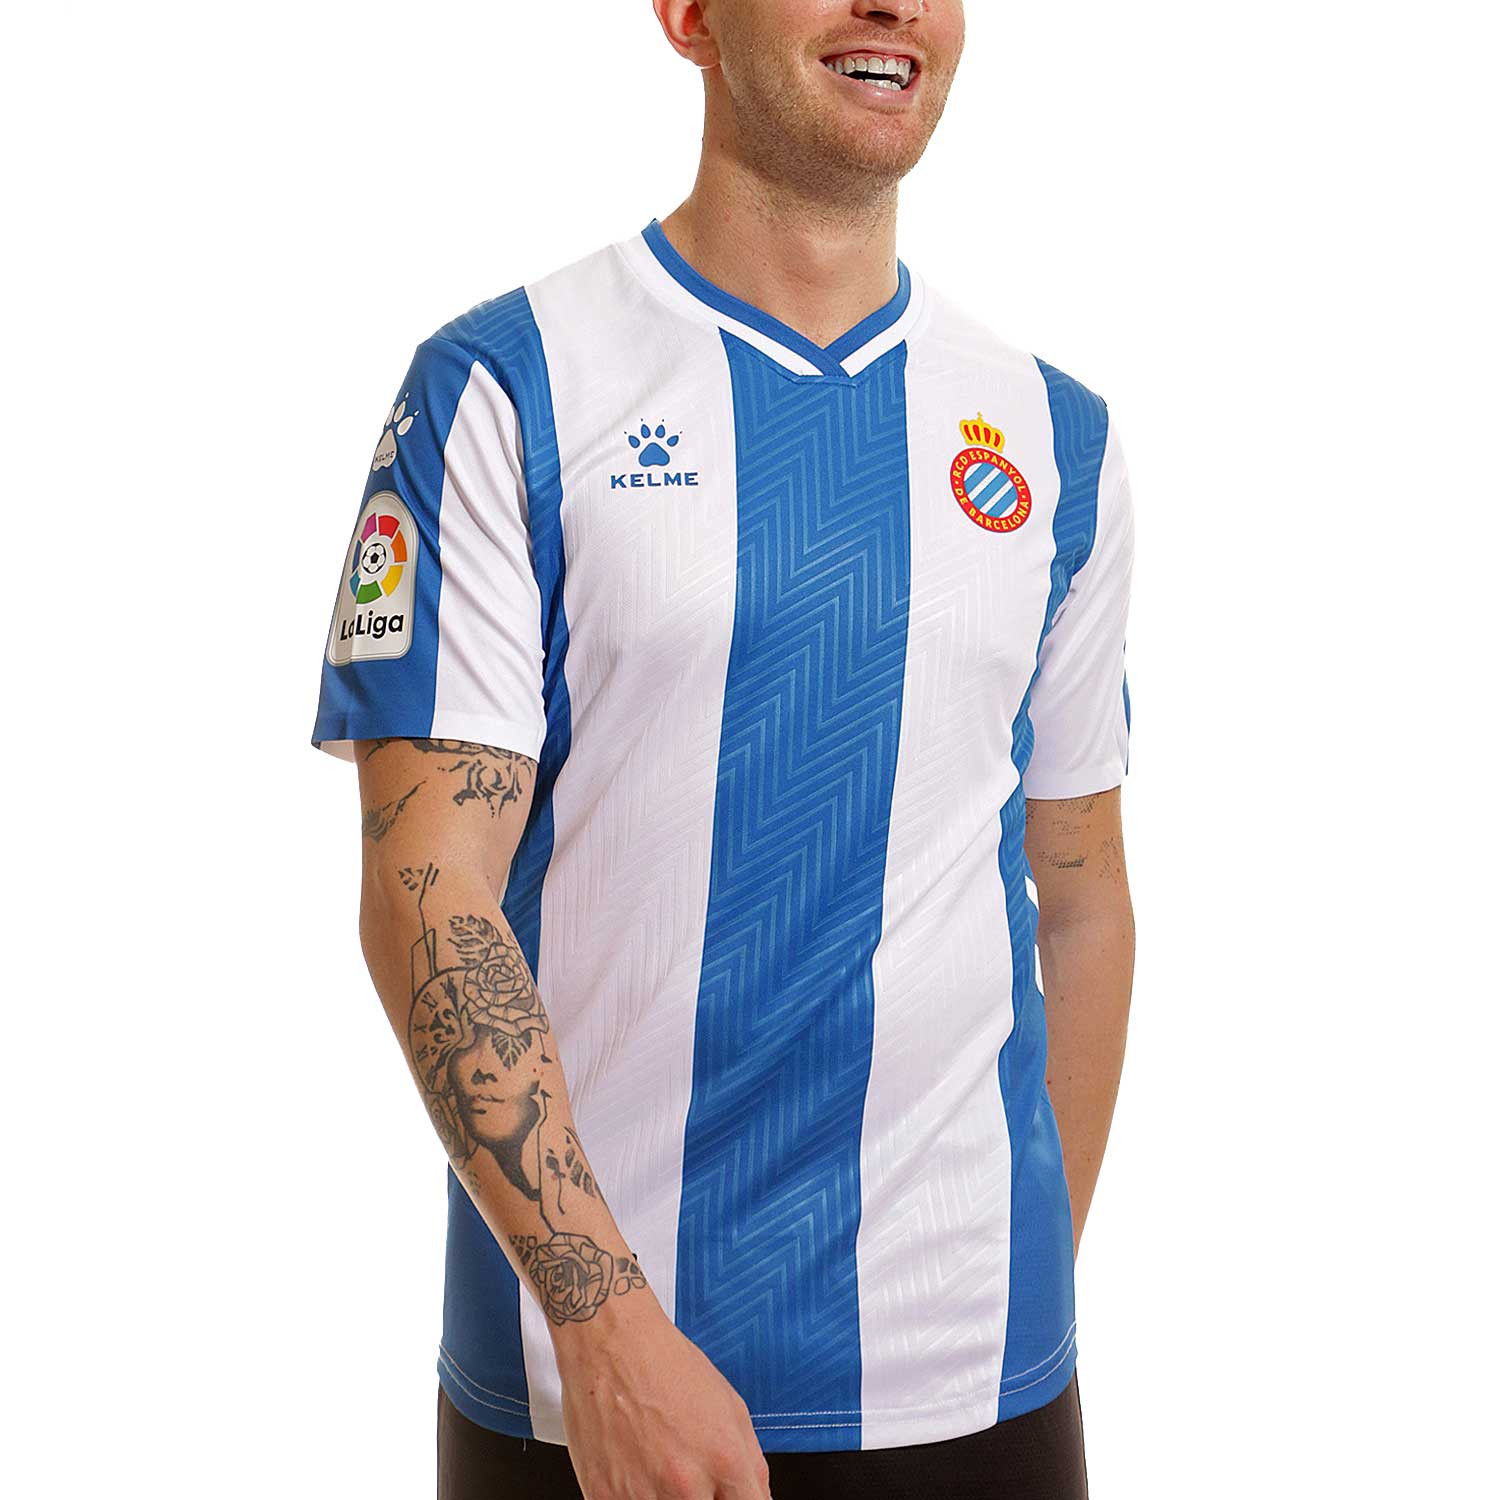 Camiseta Kelme Espanyol 2021 y |